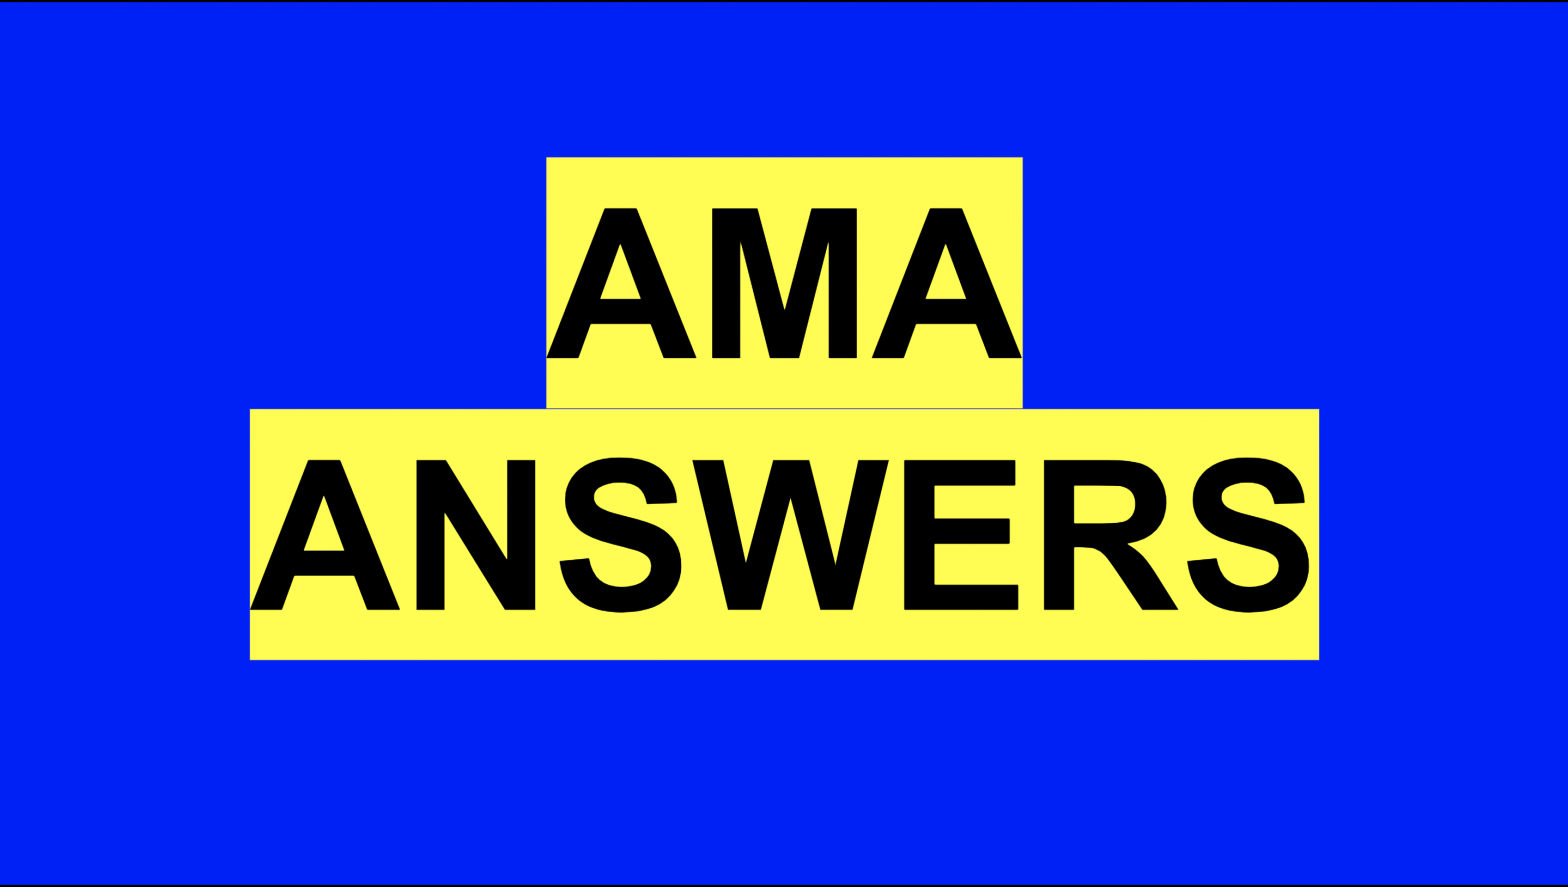 AMA ANSWERS